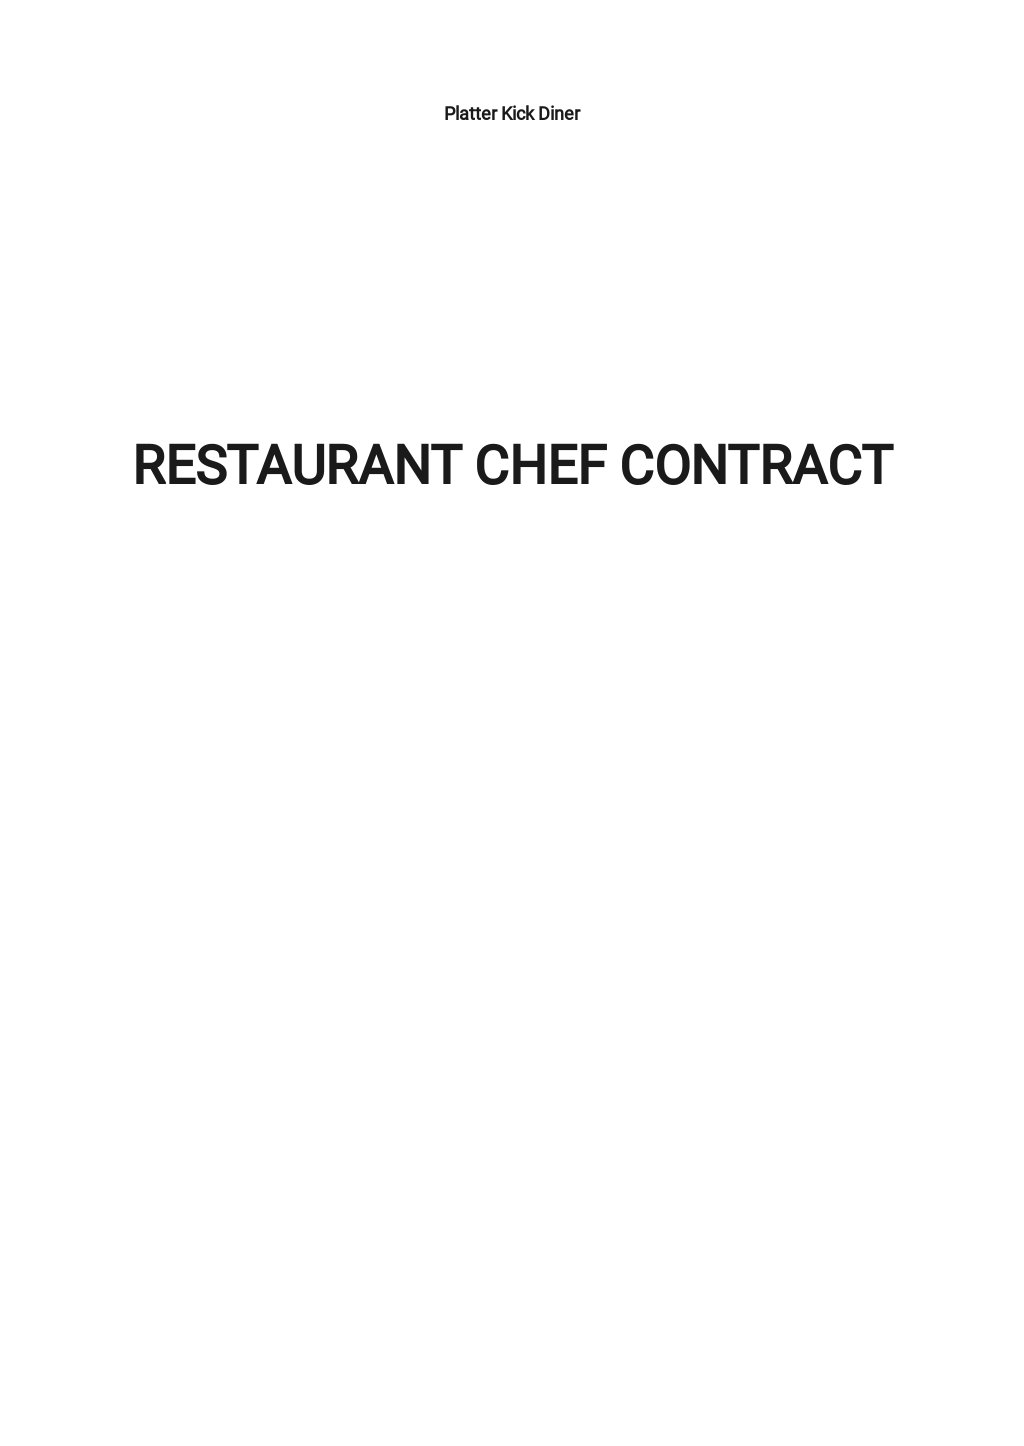 Private Chef Contract Template